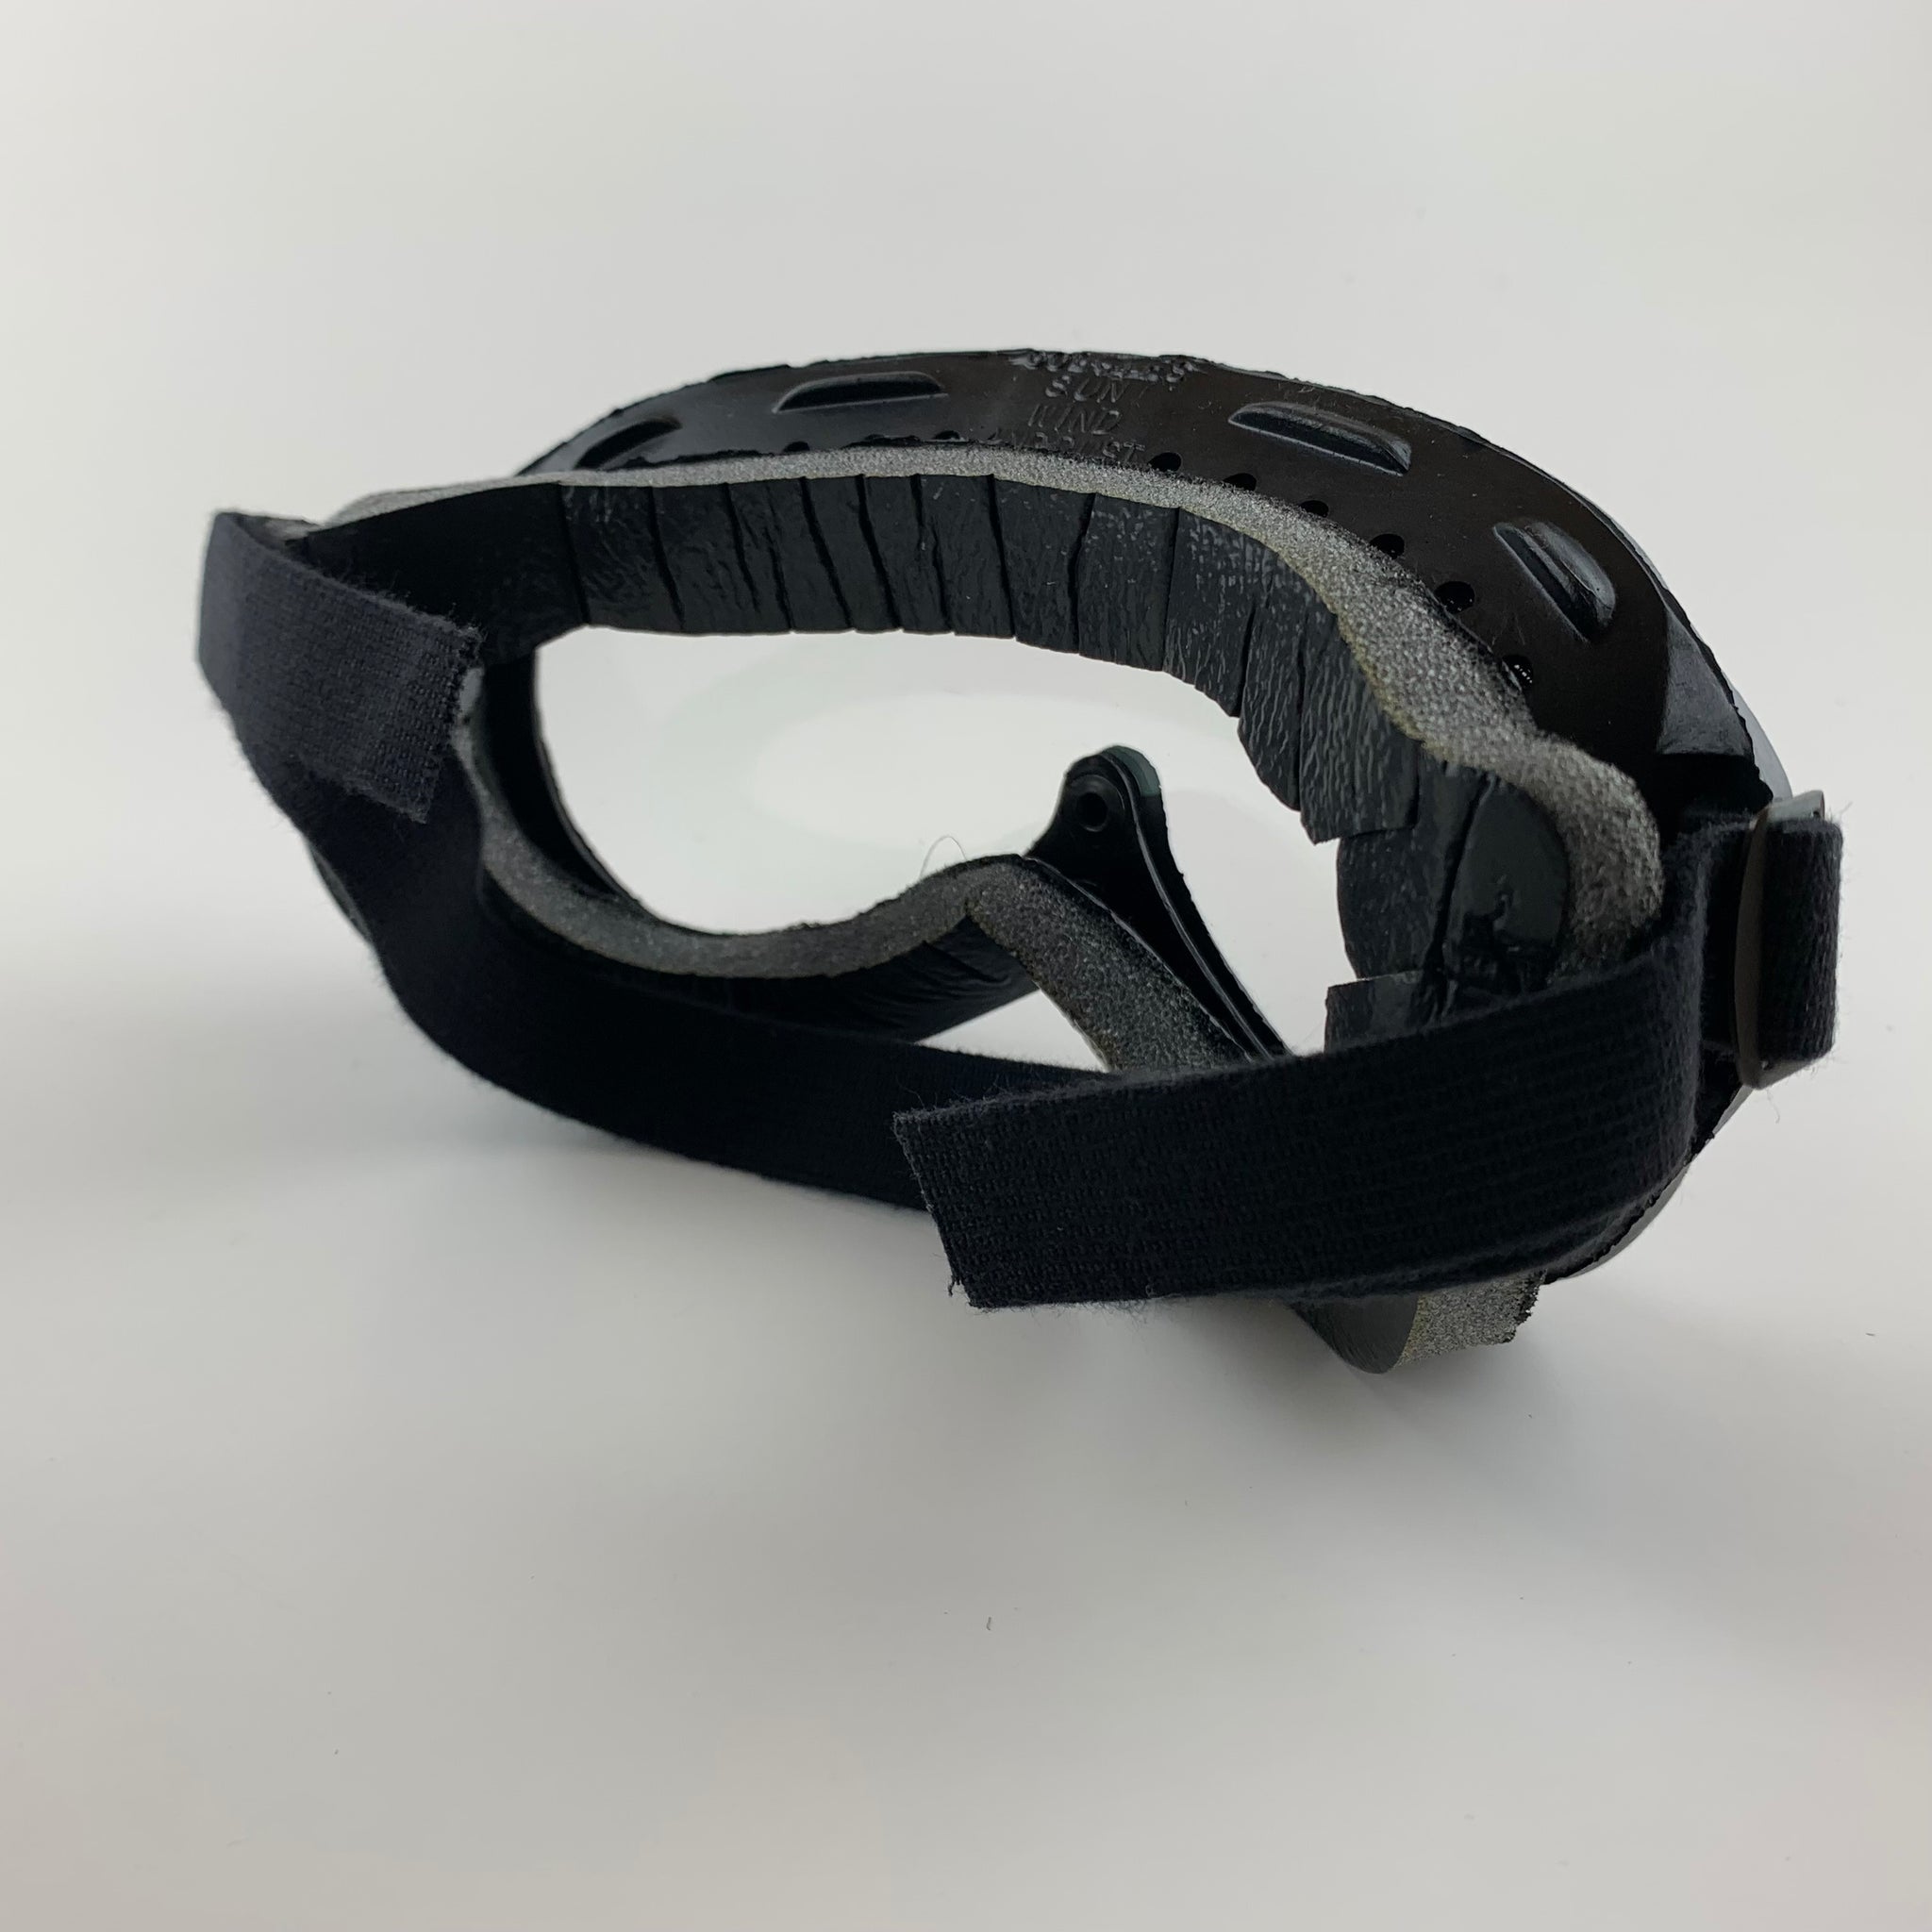 Runquan Goggles Dust Wind Sand Glasses Protective Working Eyewear Green Green 15x5cm